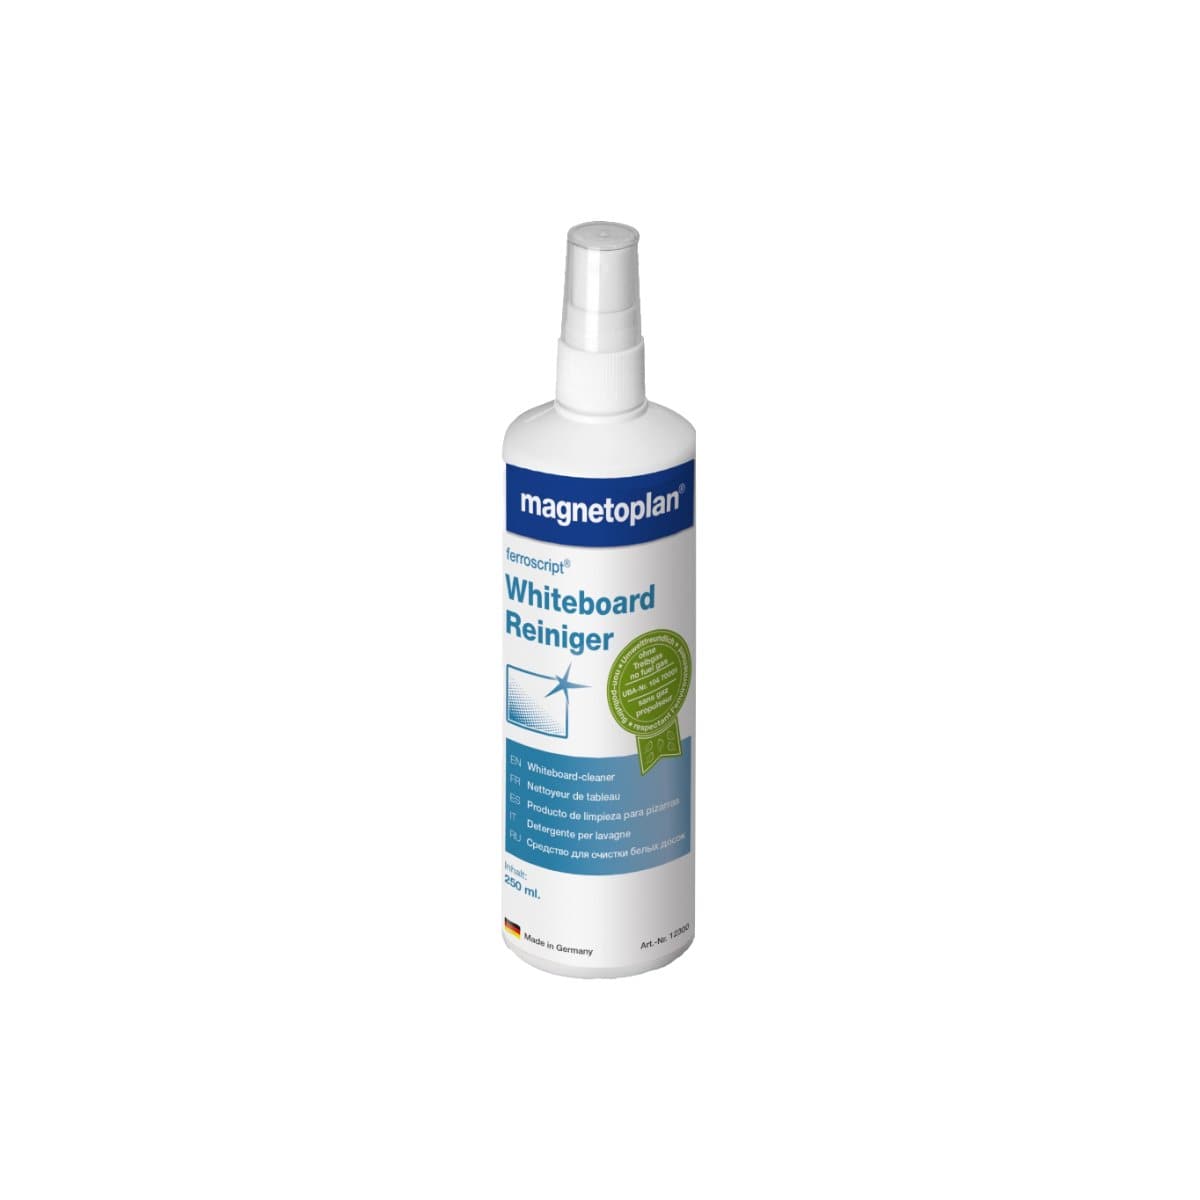 Magnetoplan White Board Spray Cleaner, 250ml